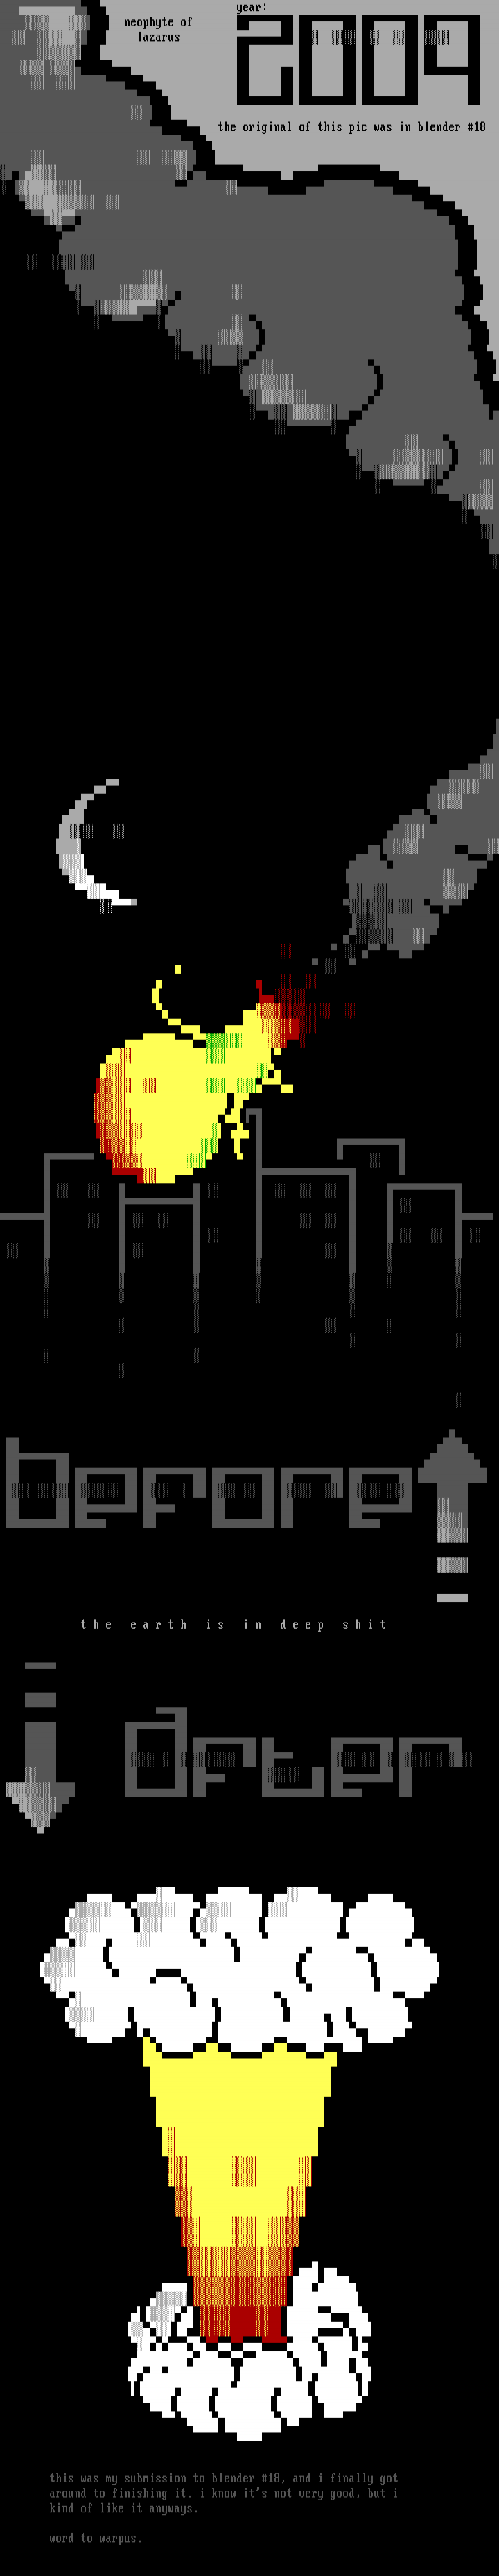 blender 18: comet/crashing/future by neophyte